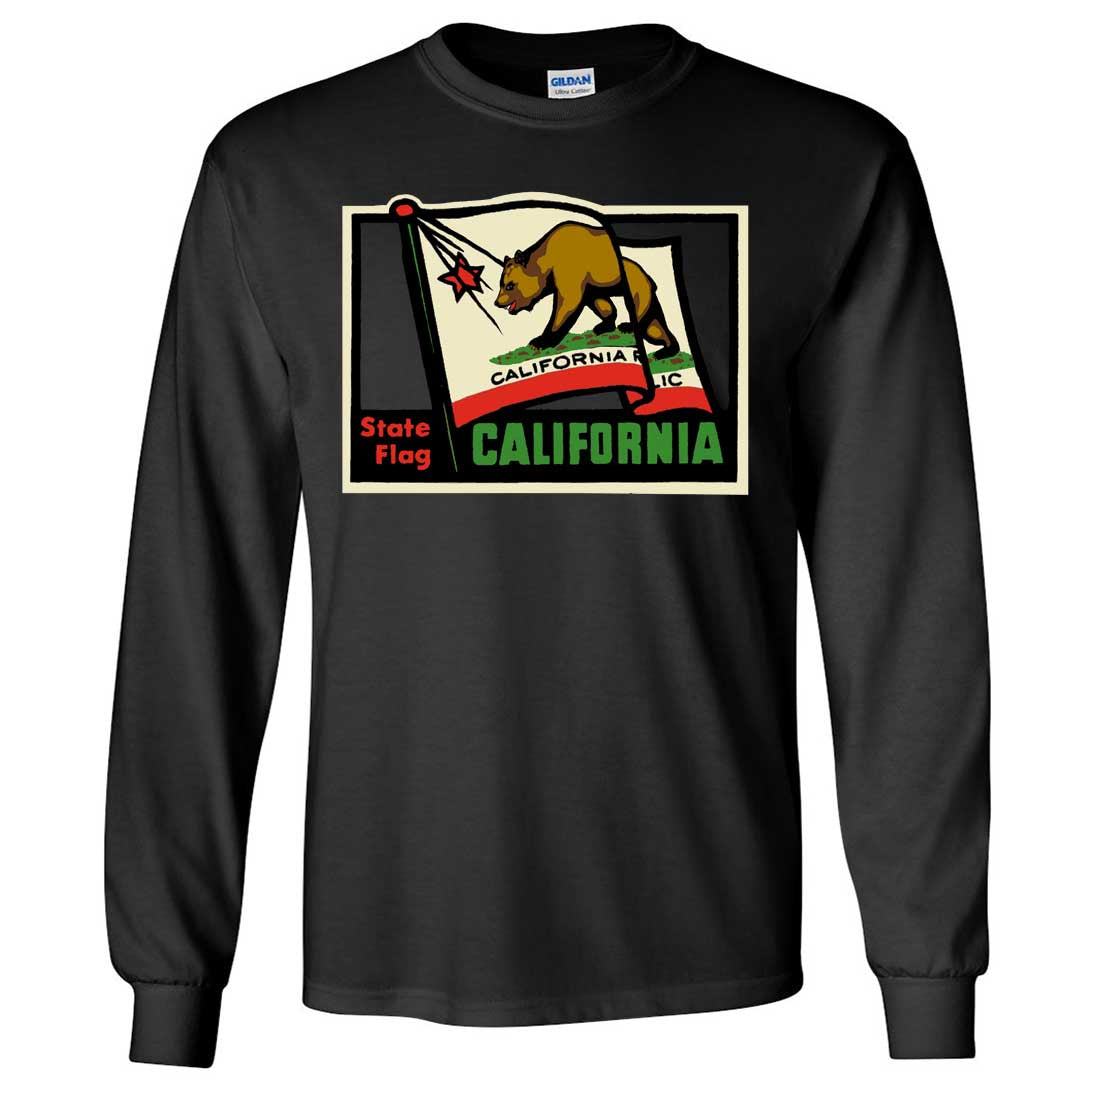 California Vintage State Flag Long Sleeve Shirt